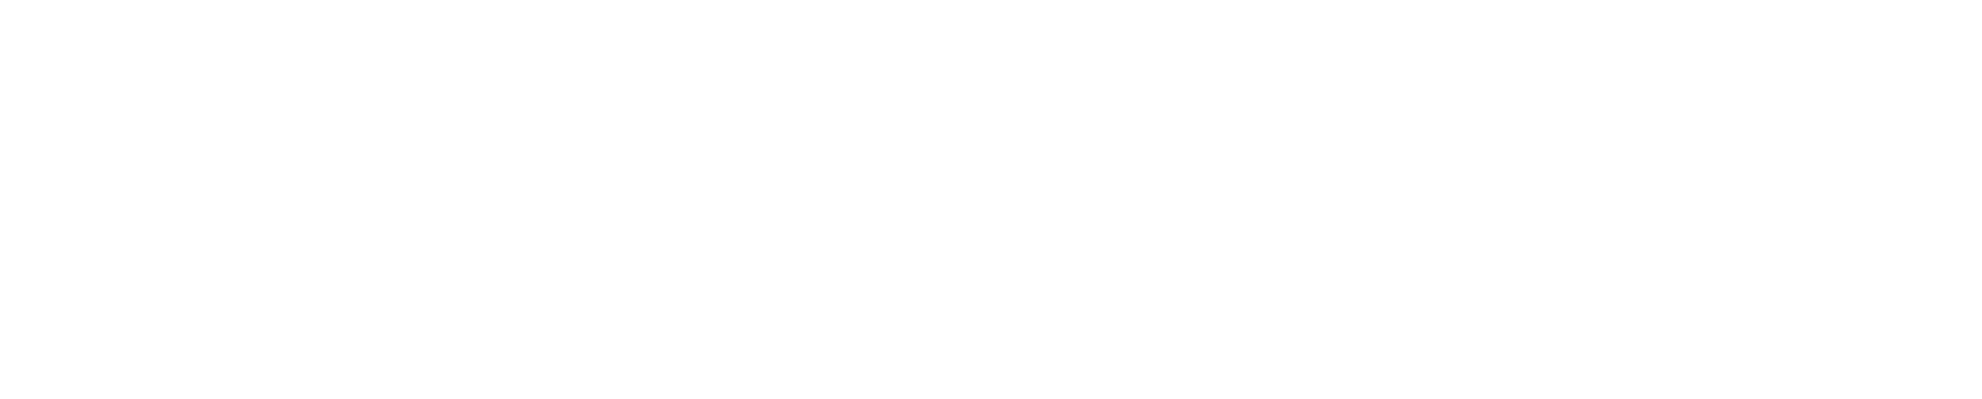 Rec Living white logo